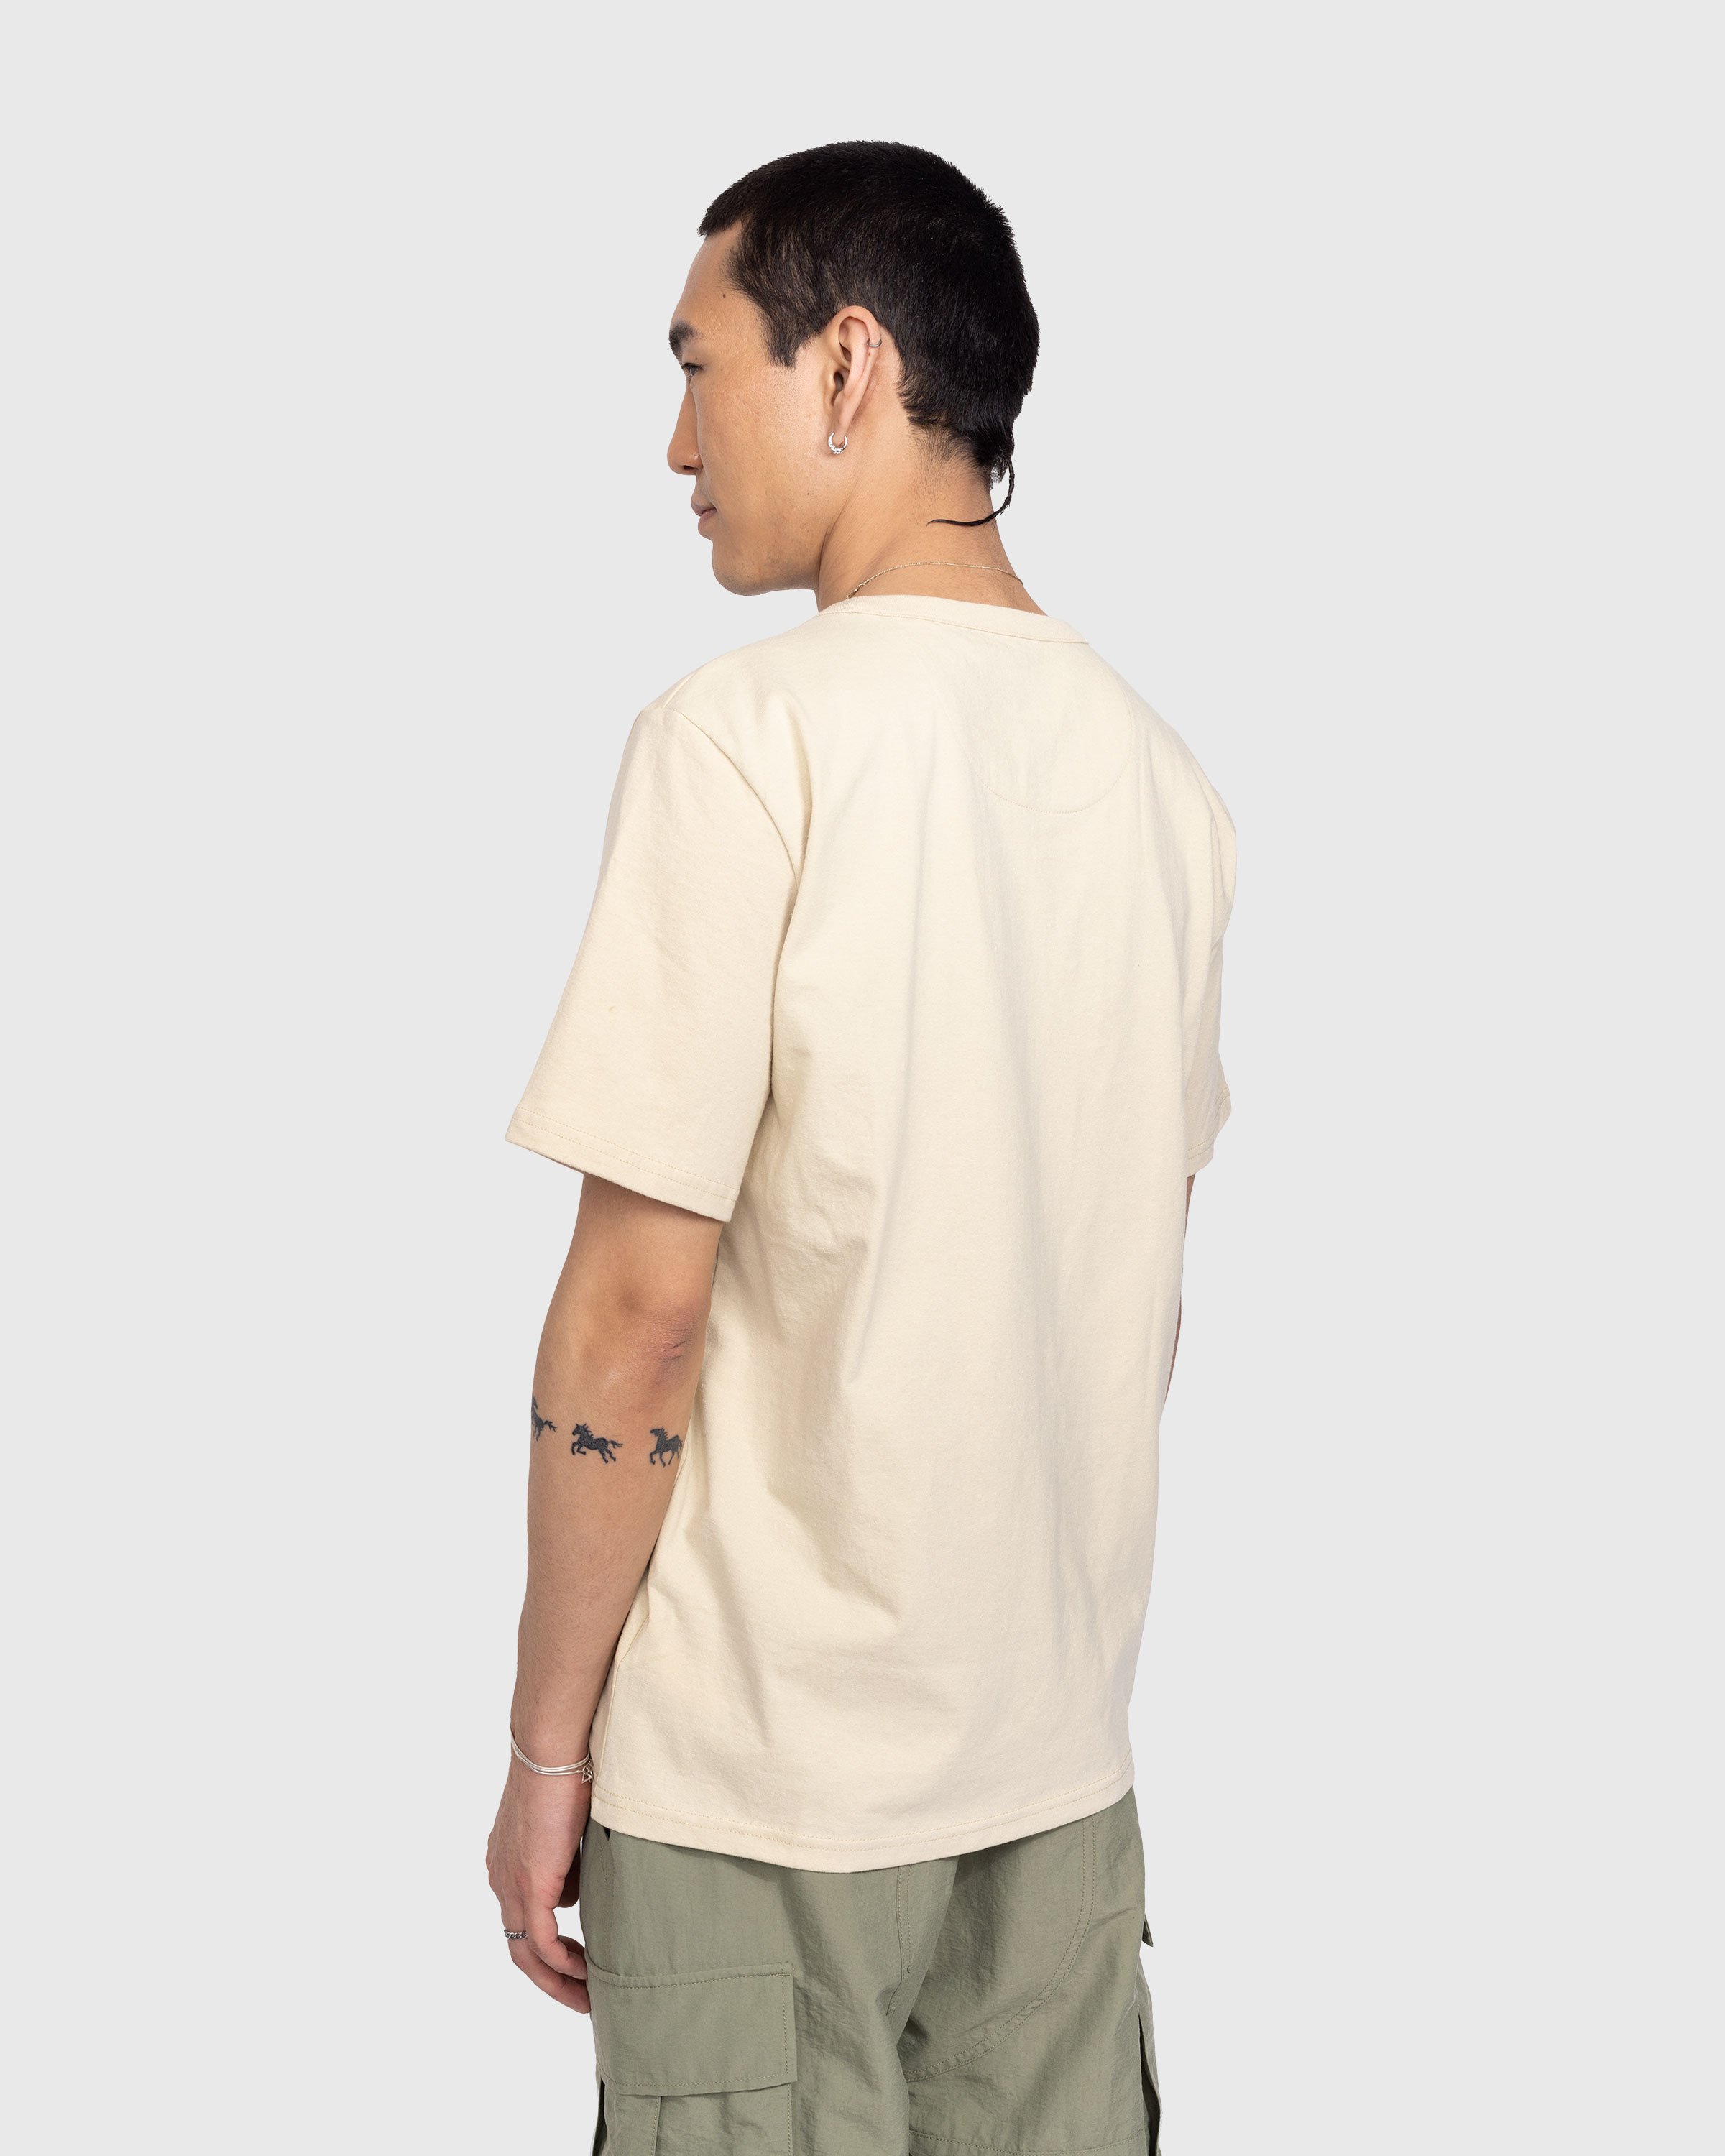 The North Face - Berk Ringer T-Shirt Gravel - Clothing - Grey - Image 3